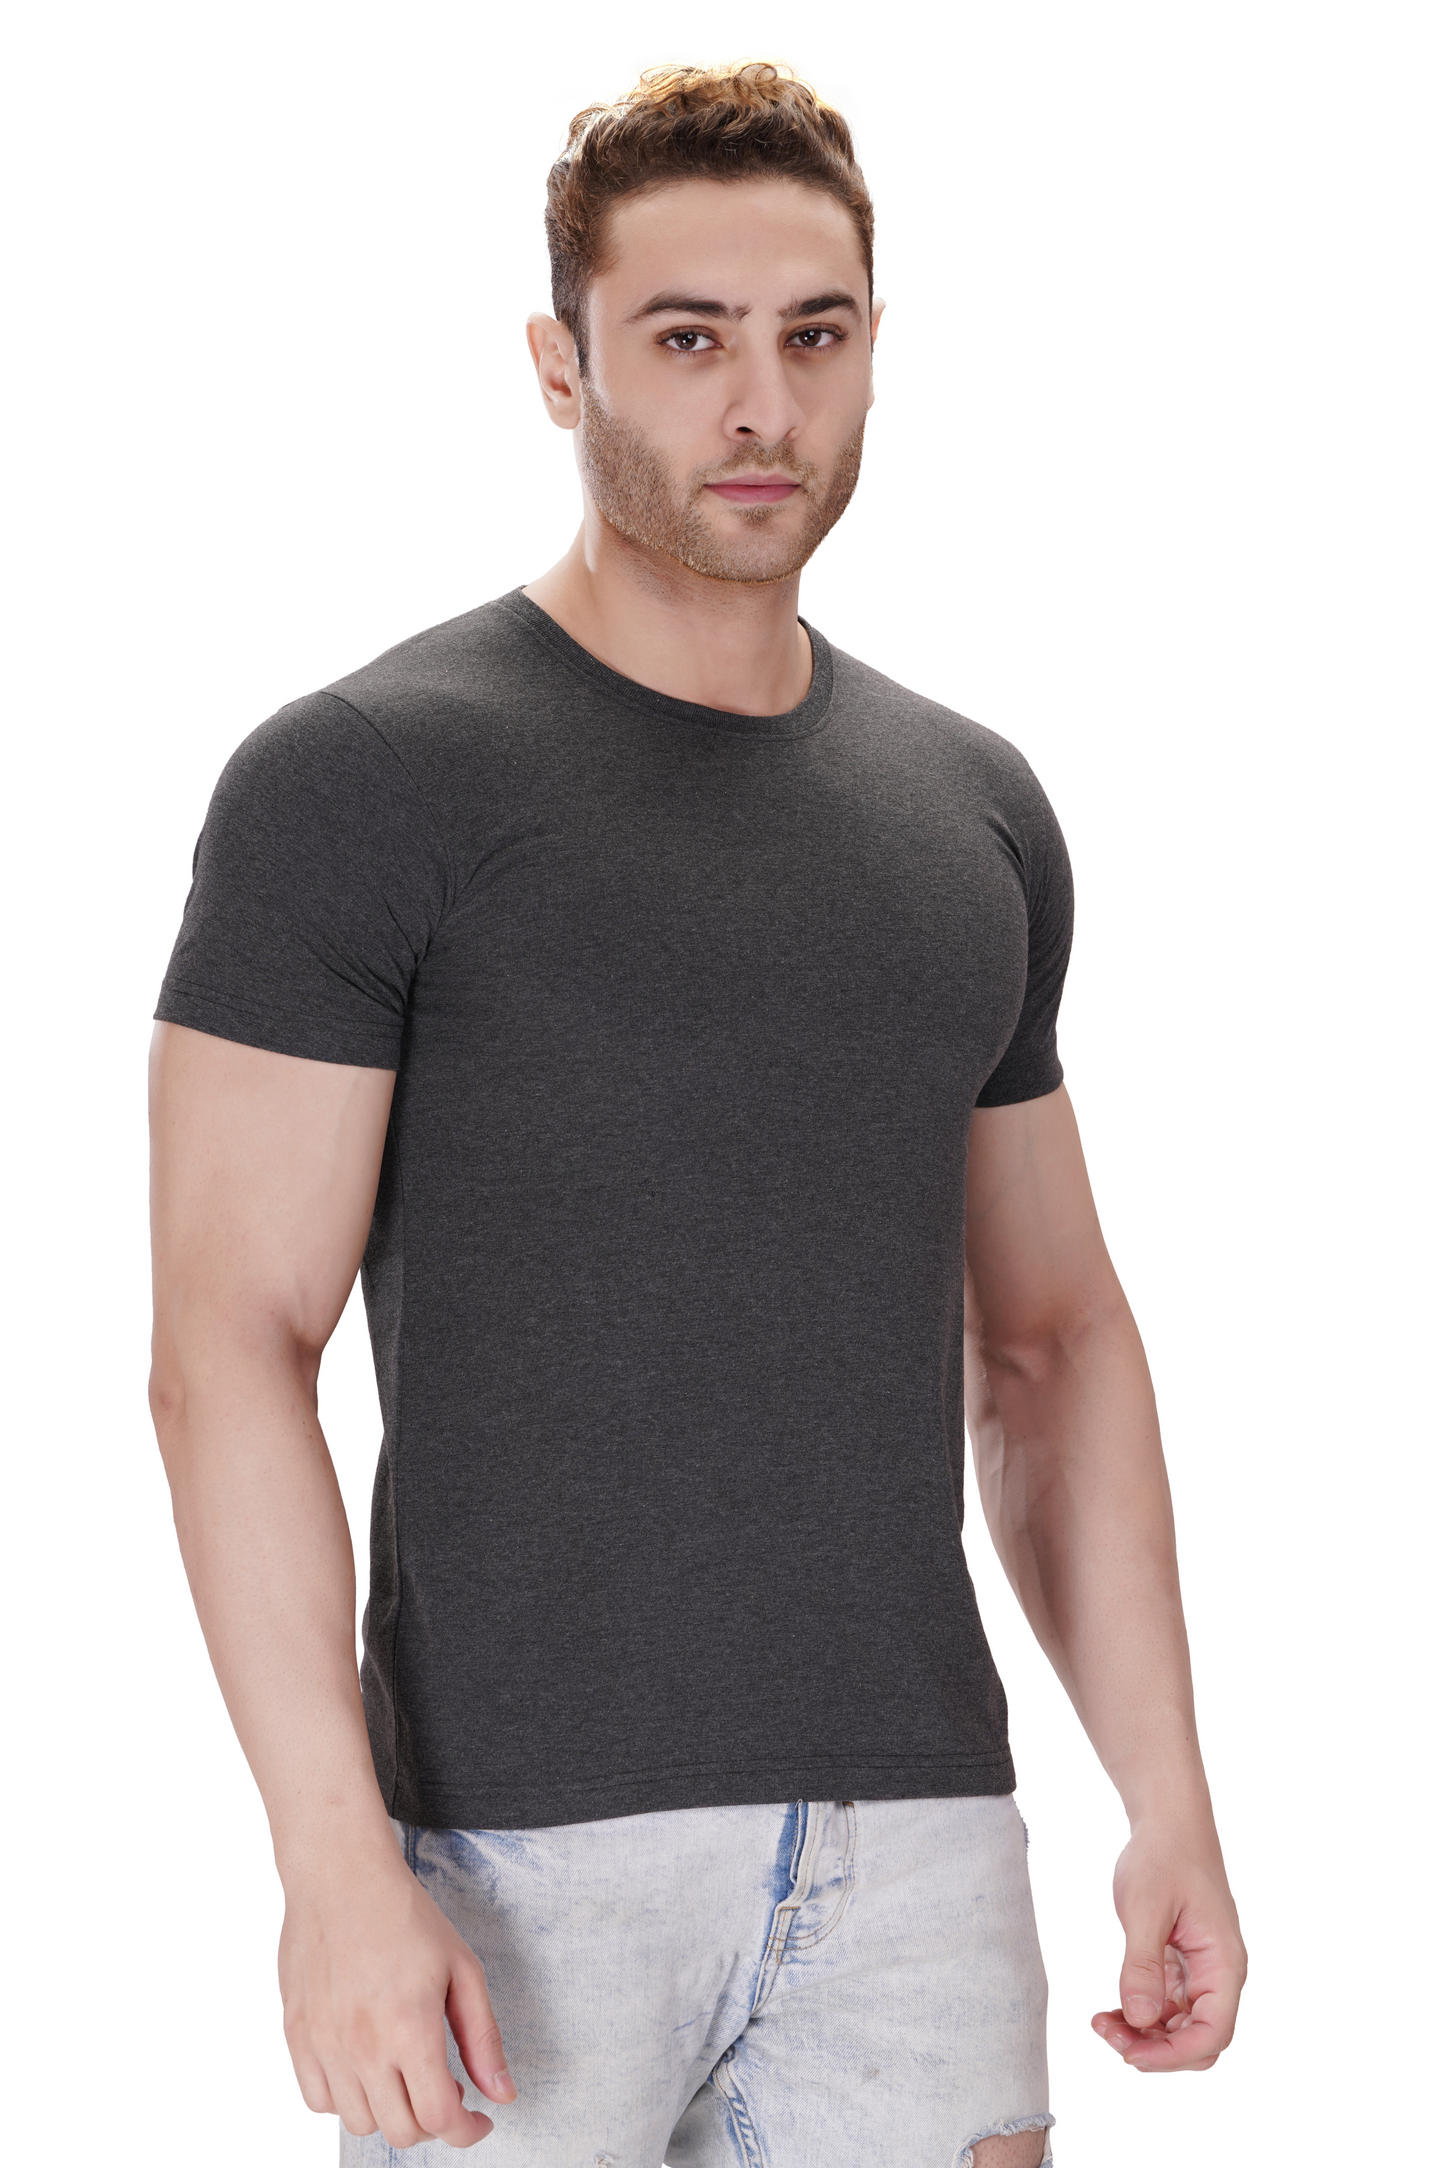 100% Cotton Men’s Half Sleeve T-Shirt - Charcoal Melange